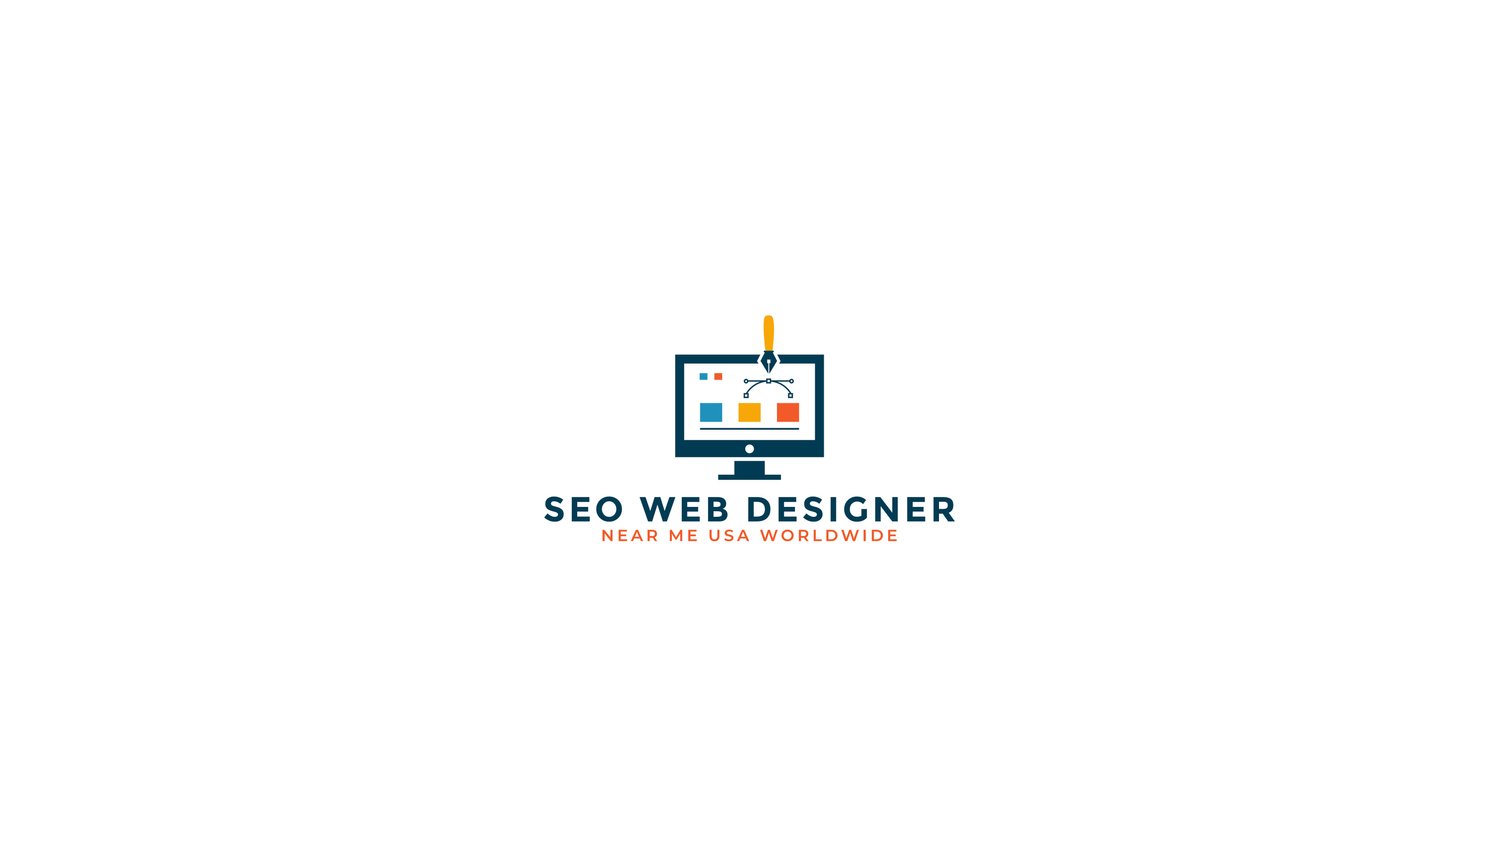 Web Designer Near Me USA Worldwide | SEO Services Near Me